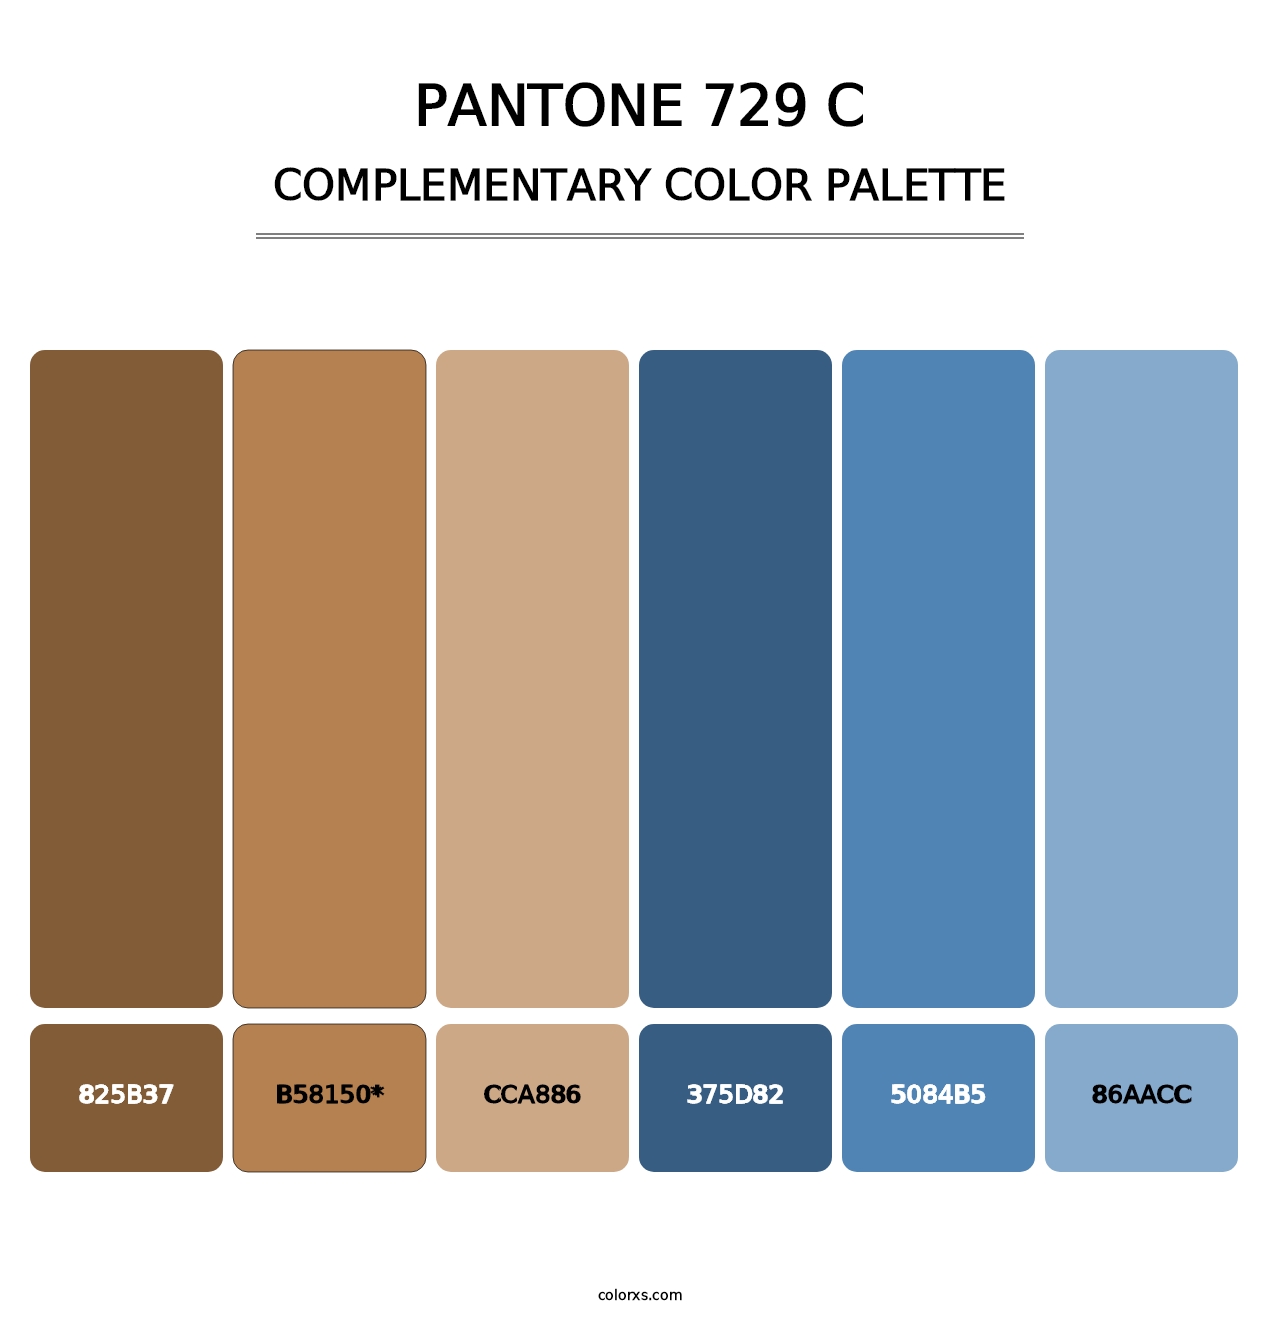 PANTONE 729 C - Complementary Color Palette